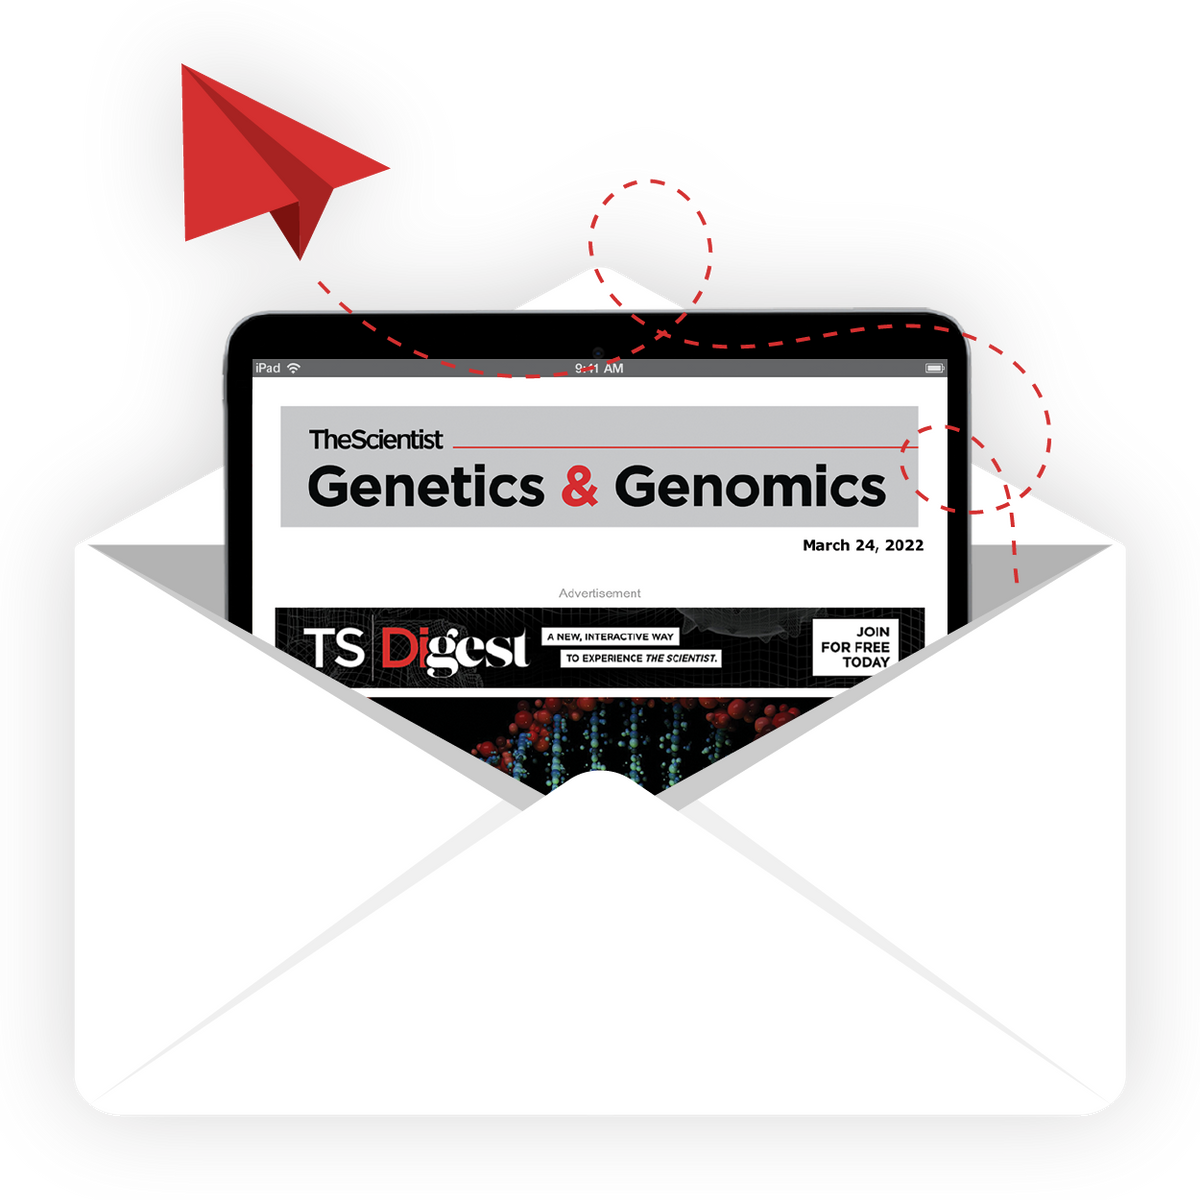 Genetics and Genomics RAN promo image